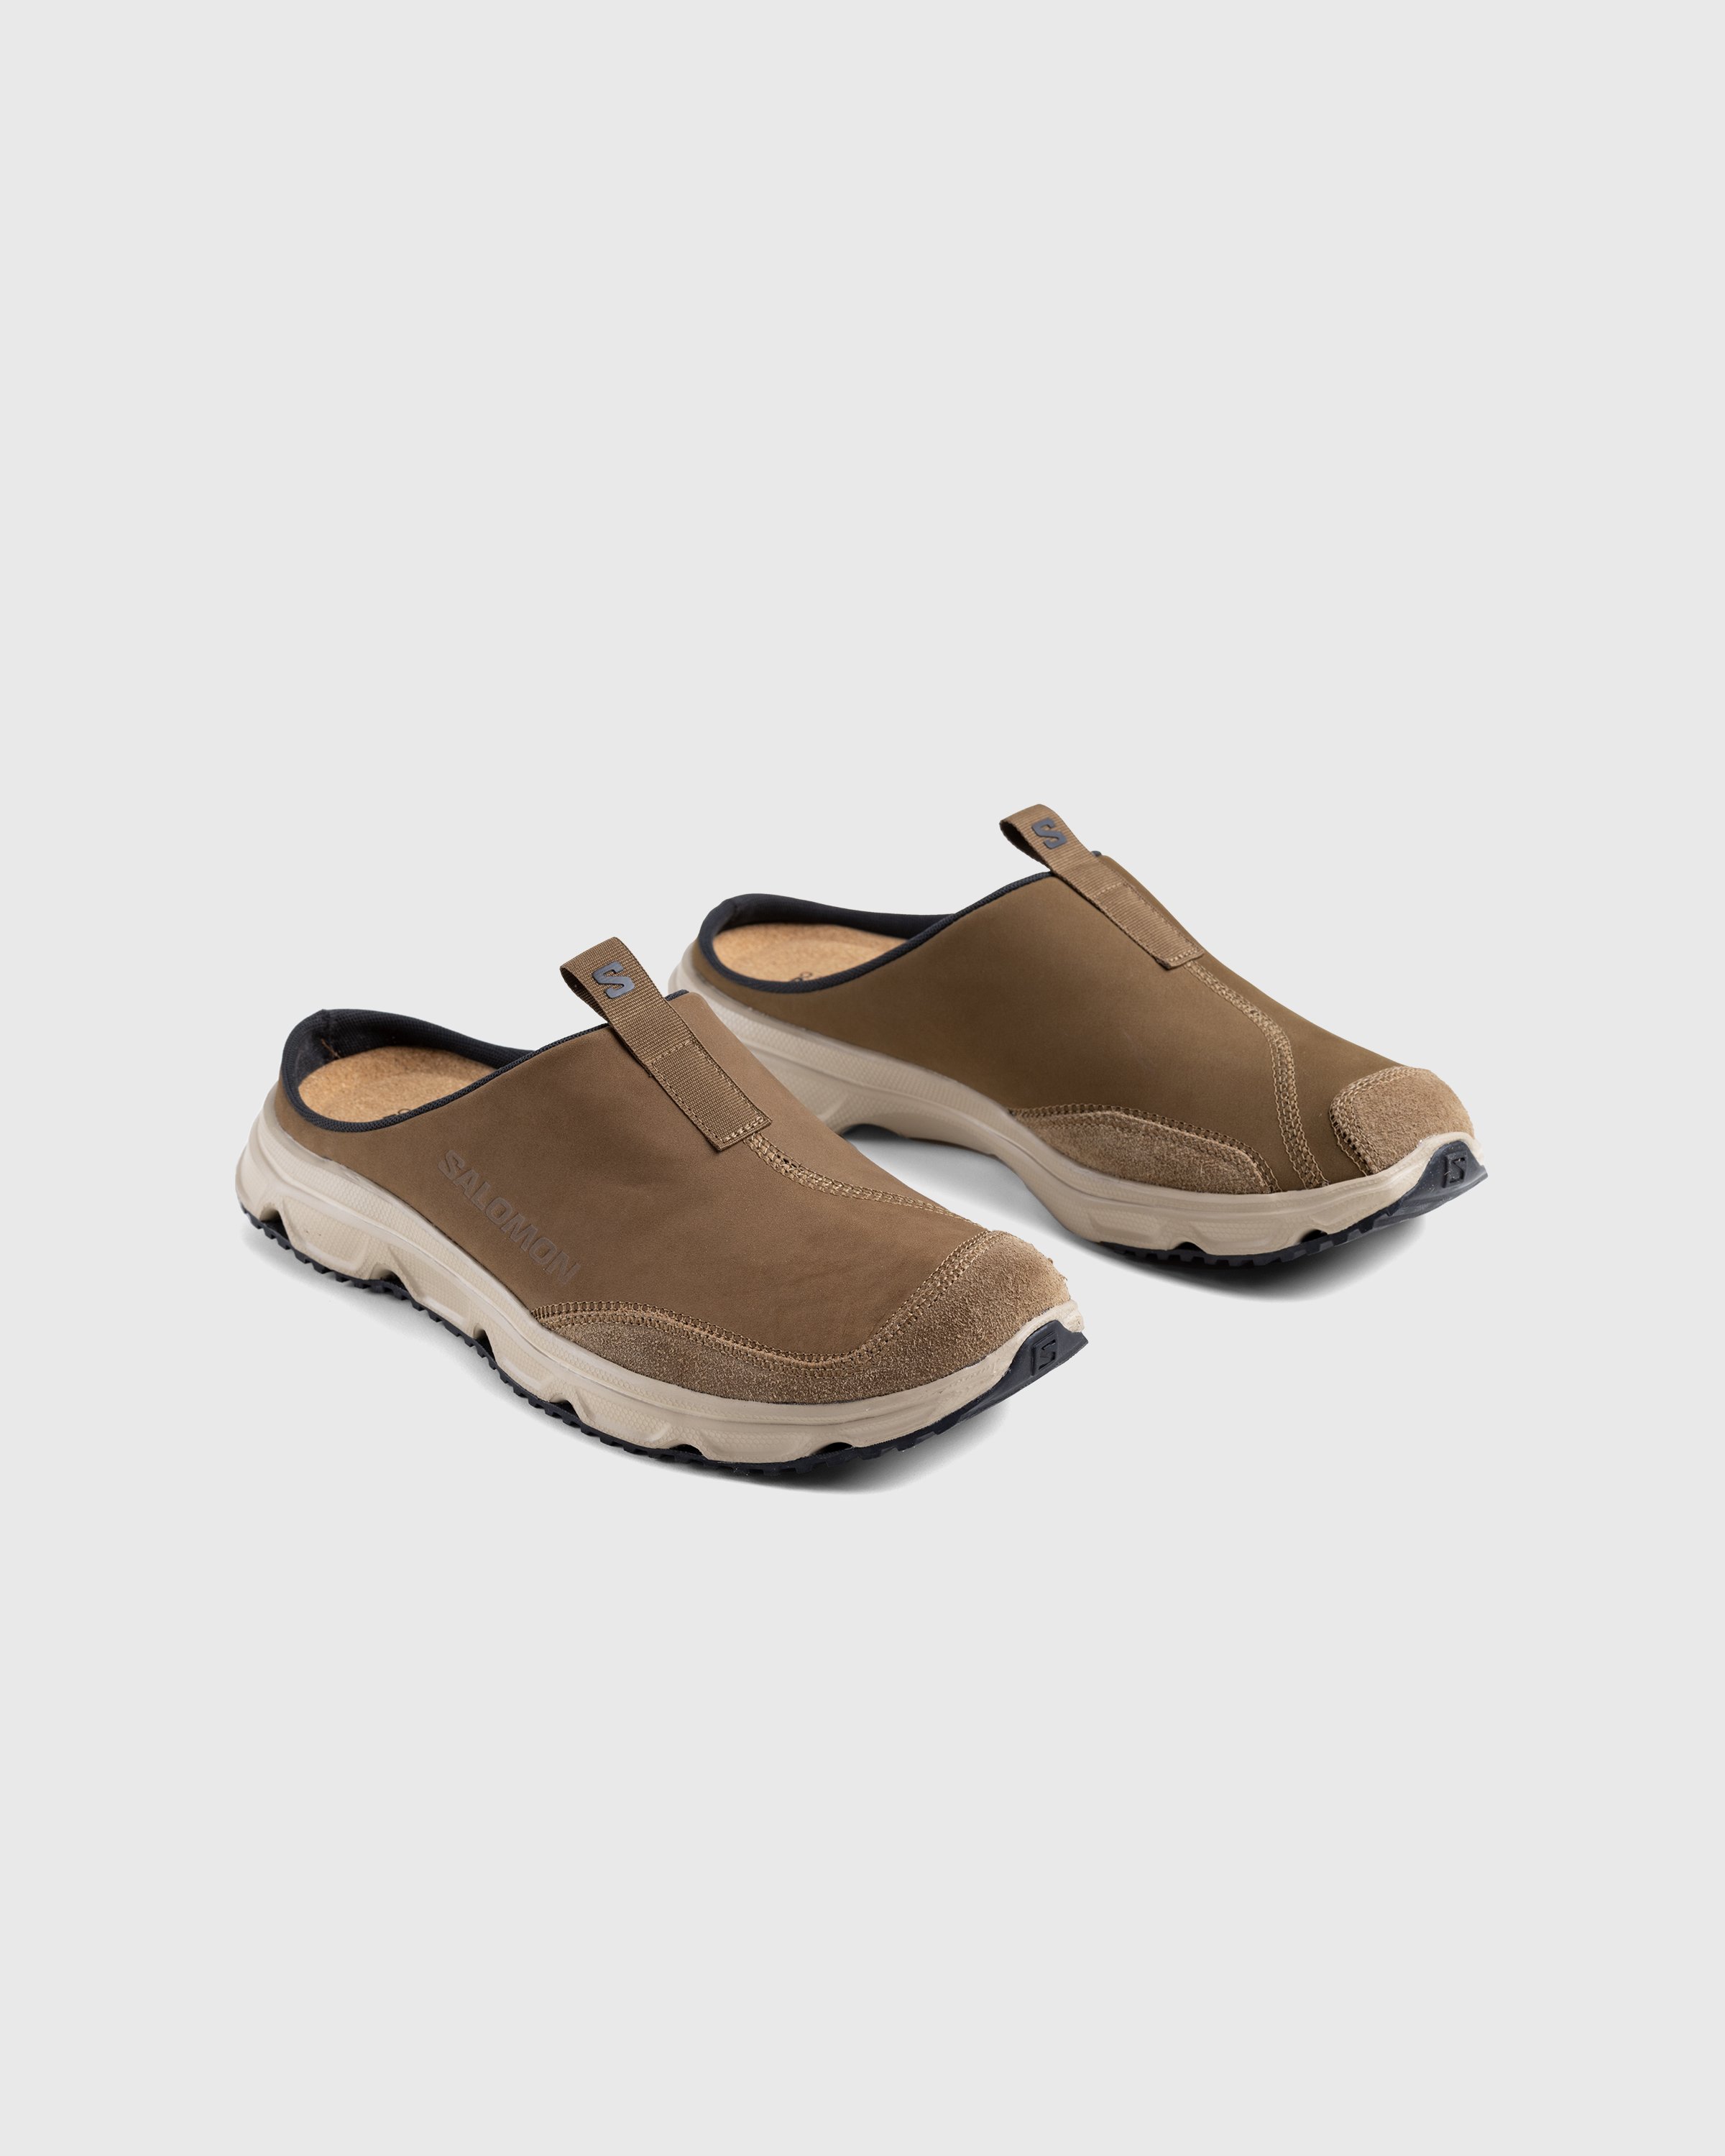 Salomon - RX Slide Leather Advanced Kang/Safari - Footwear - Beige - Image 3